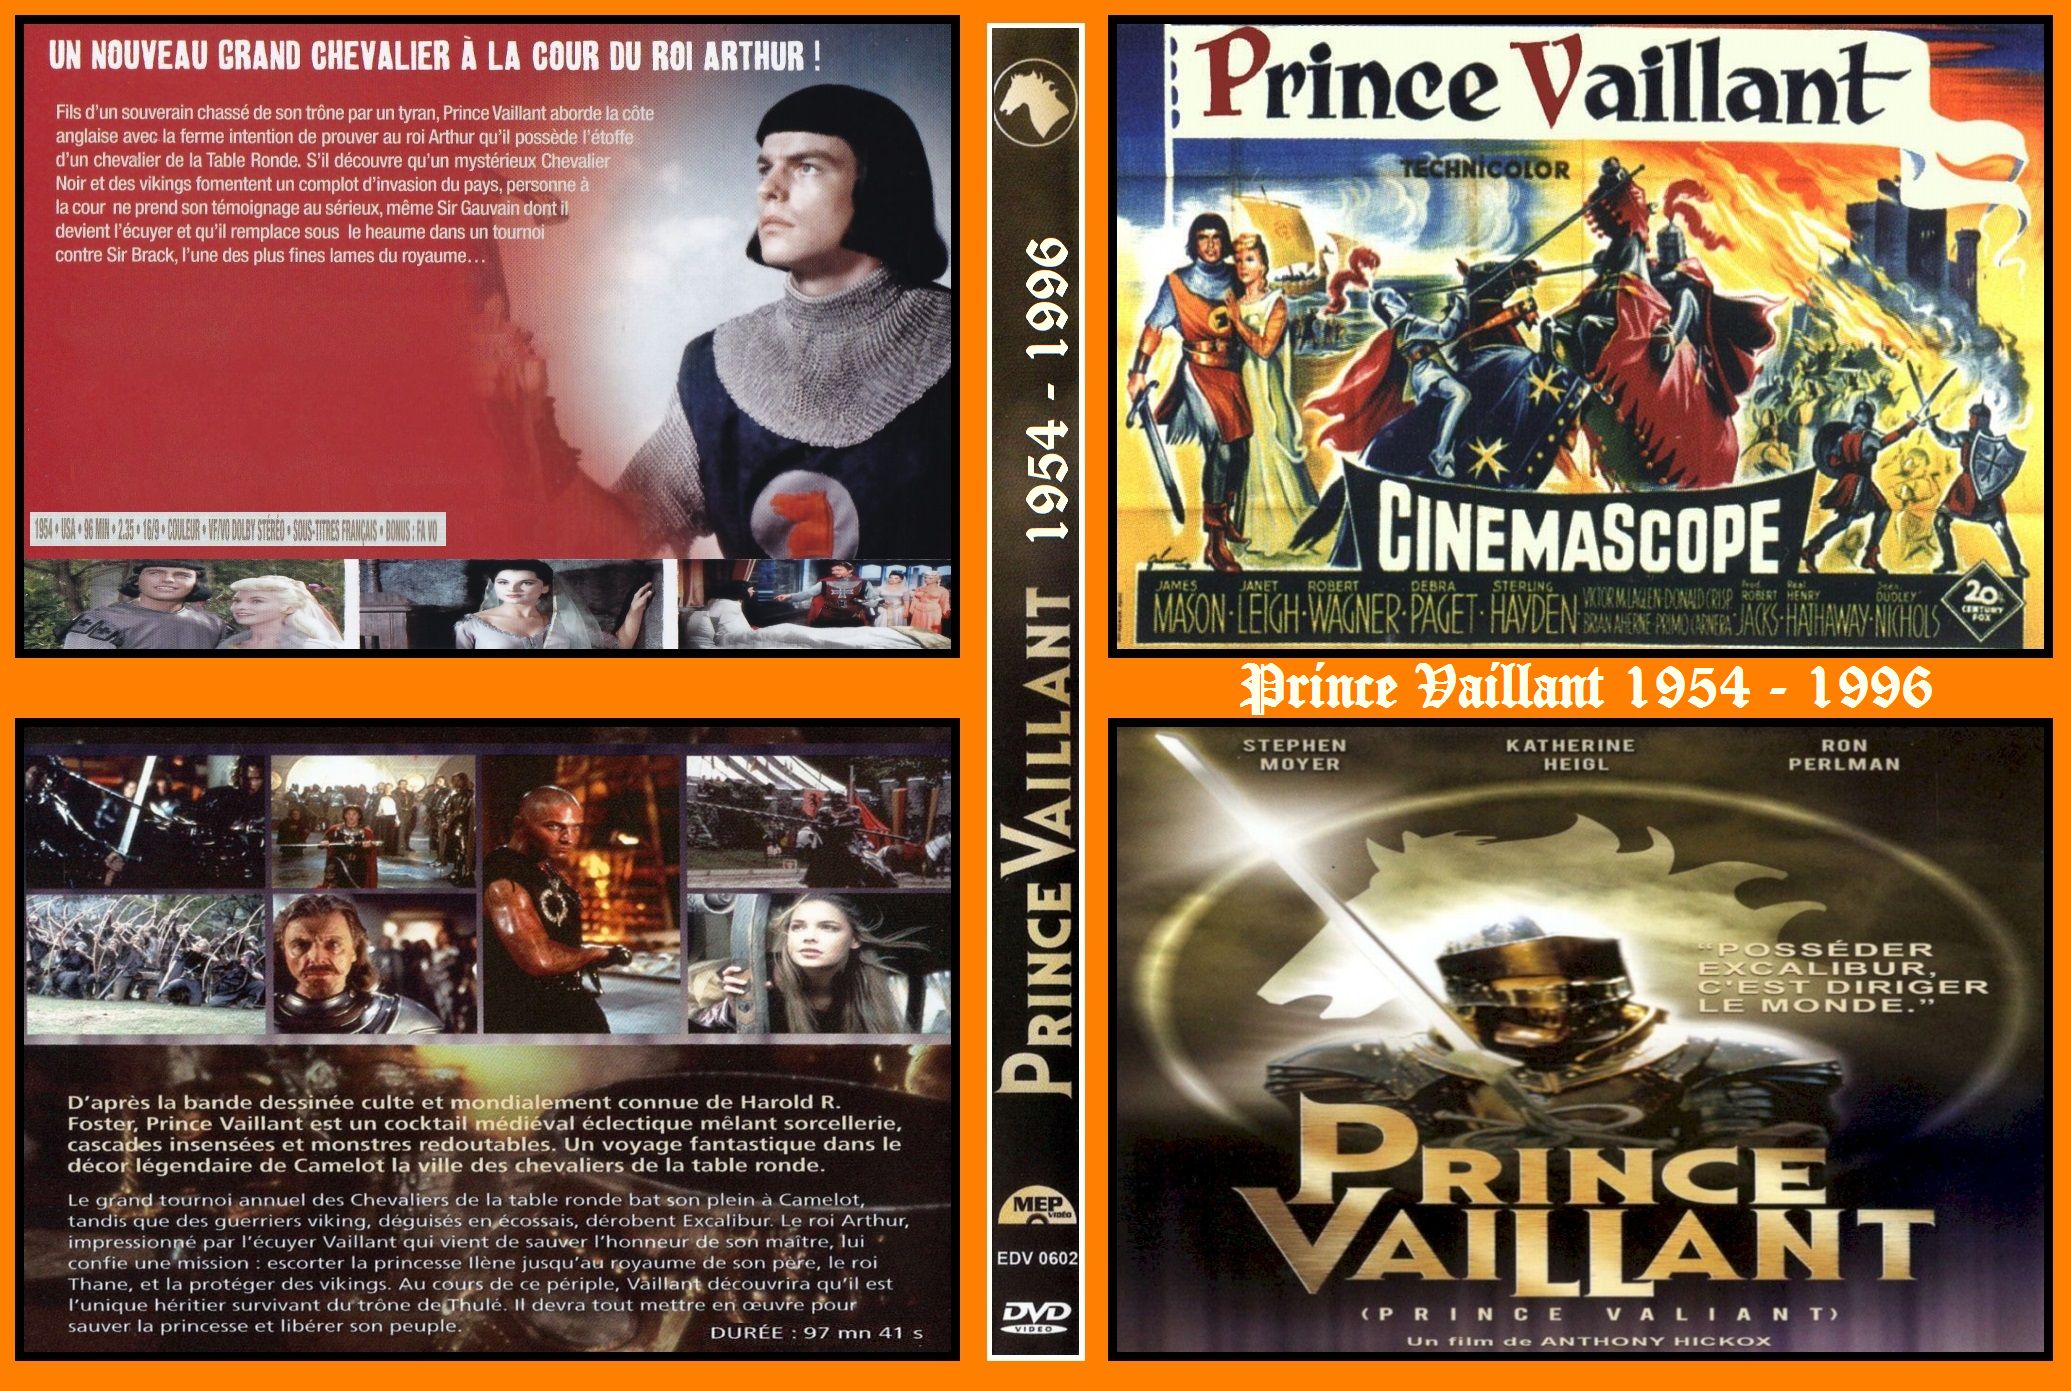 Jaquette DVD Prince Vaillant 1954 - 1996 Custom 